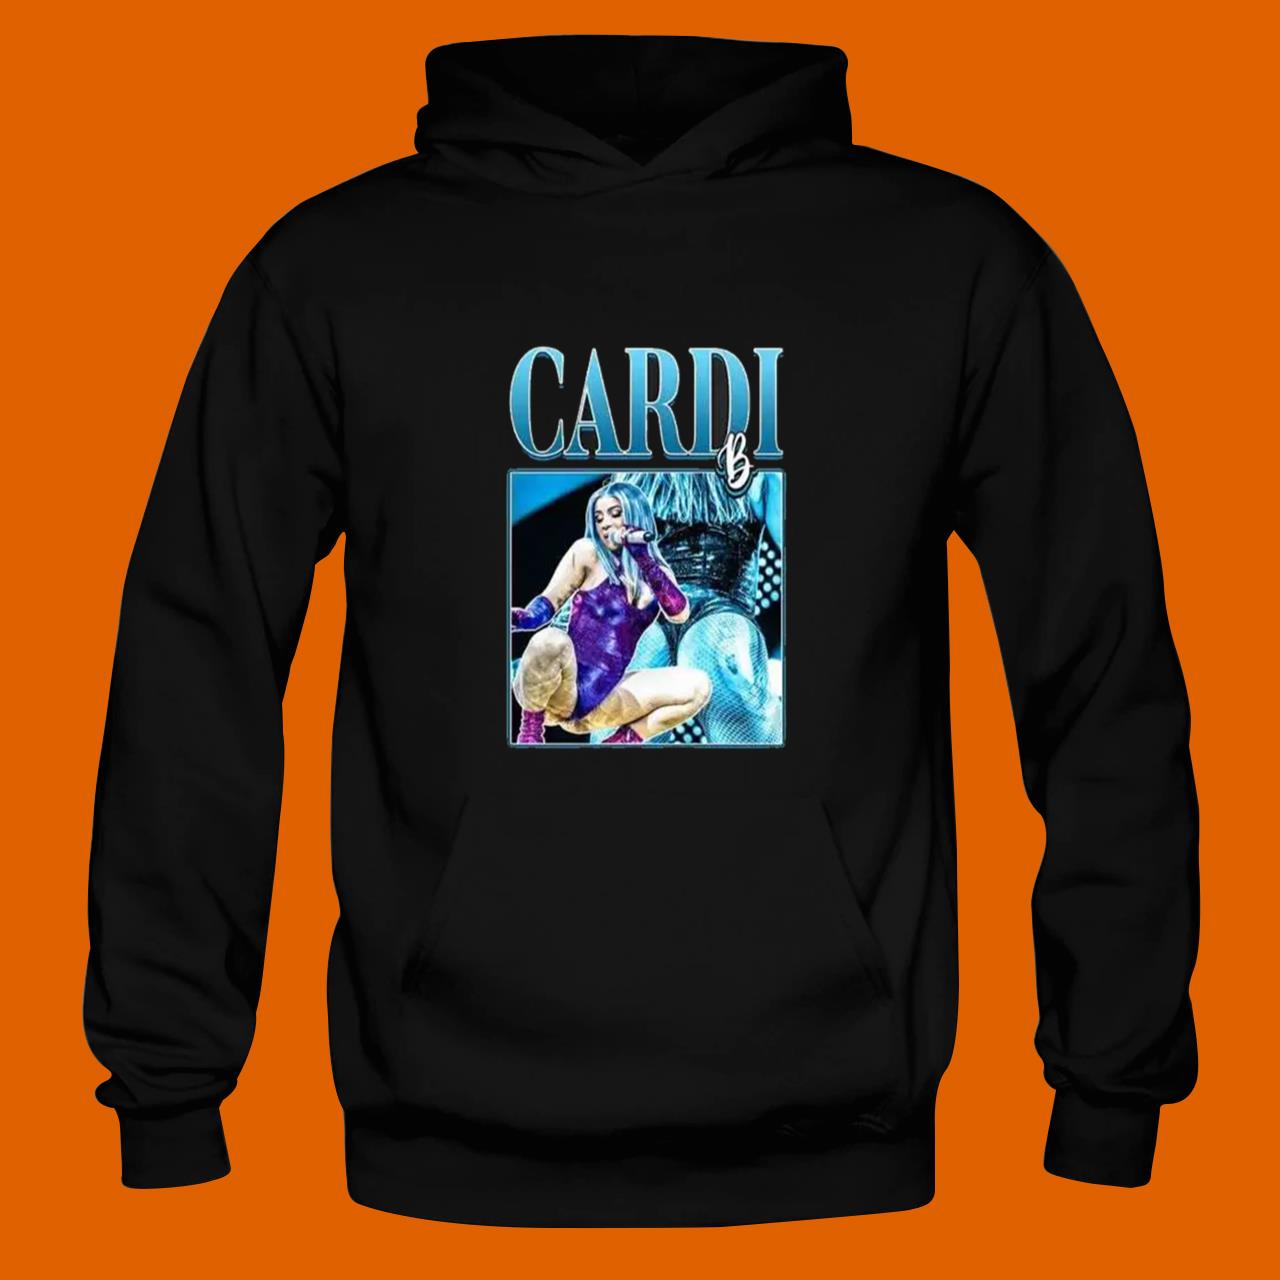 Cardi B Rapper Unisex Graphic T Shirt